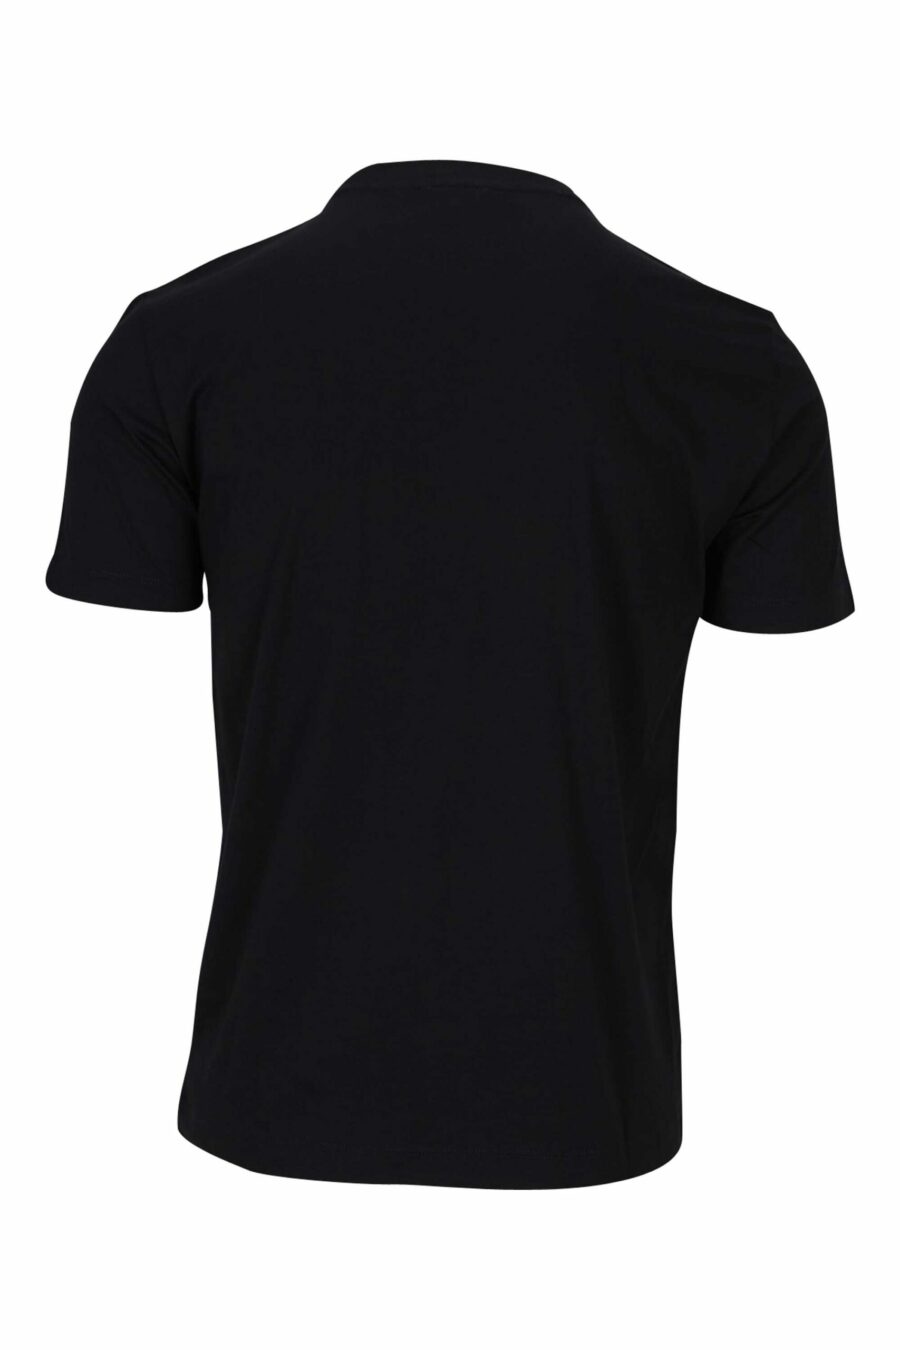 Camiseta negra con maxilogo en degráde "lux identity" - 8056787953321 1 scaled